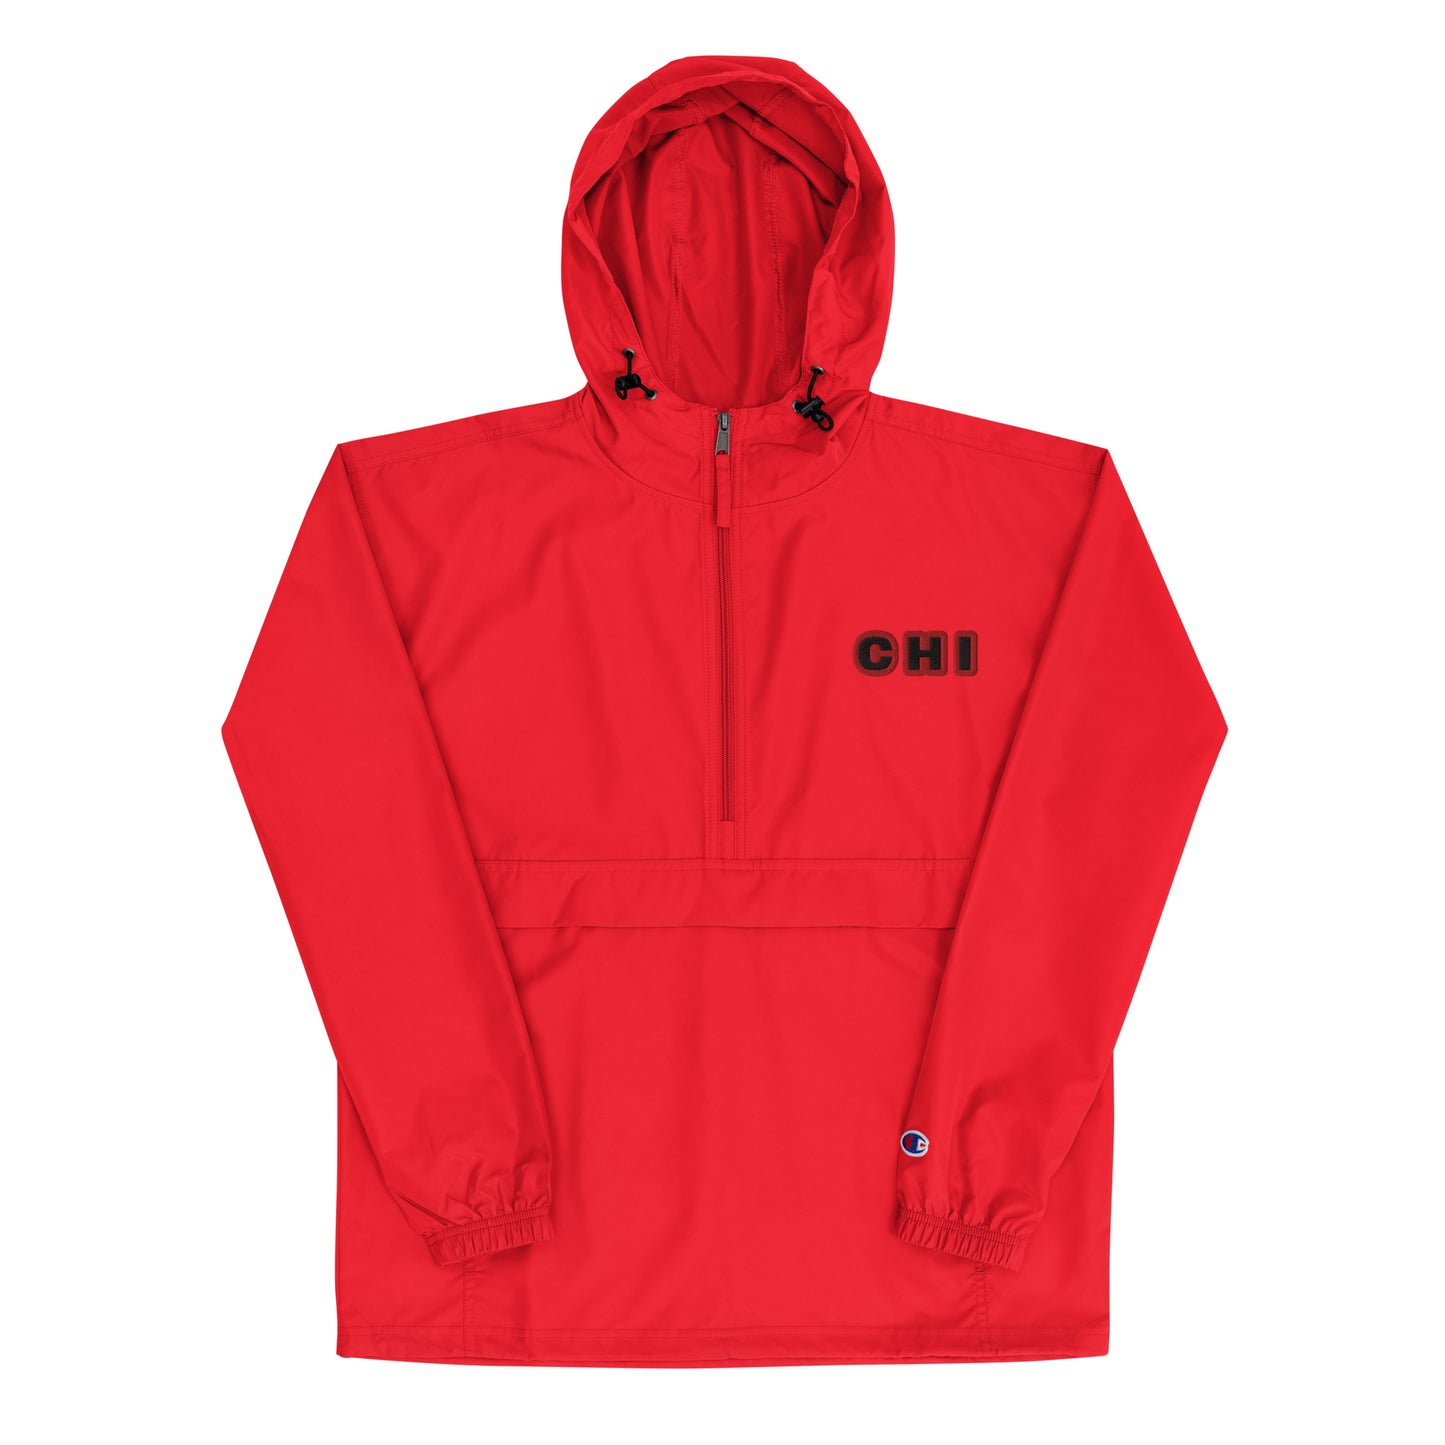 Chi Champion Packable Jacket - lyricxart